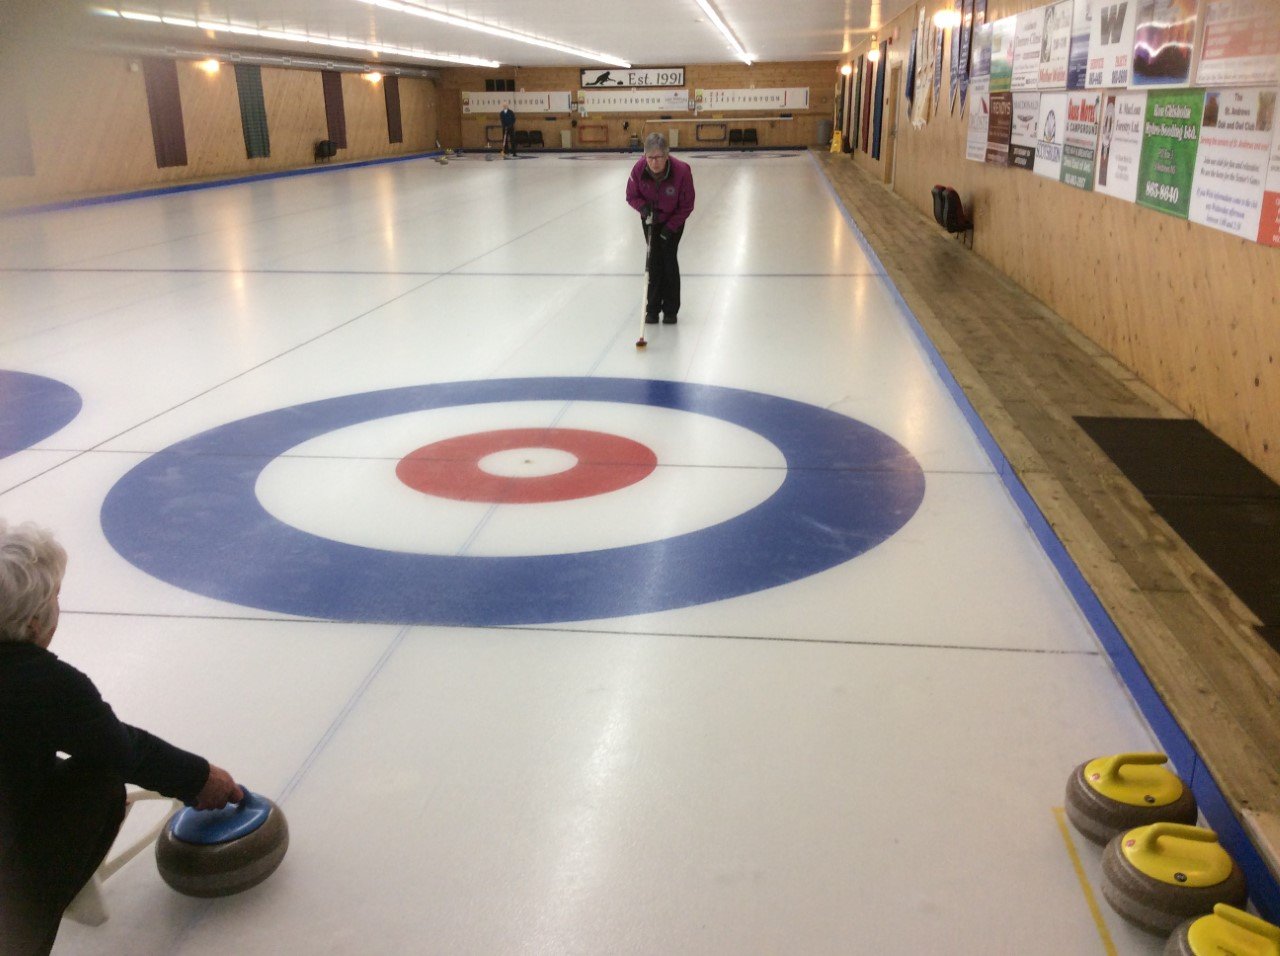 Linda Juurlink instructing at Highlander Curling Club